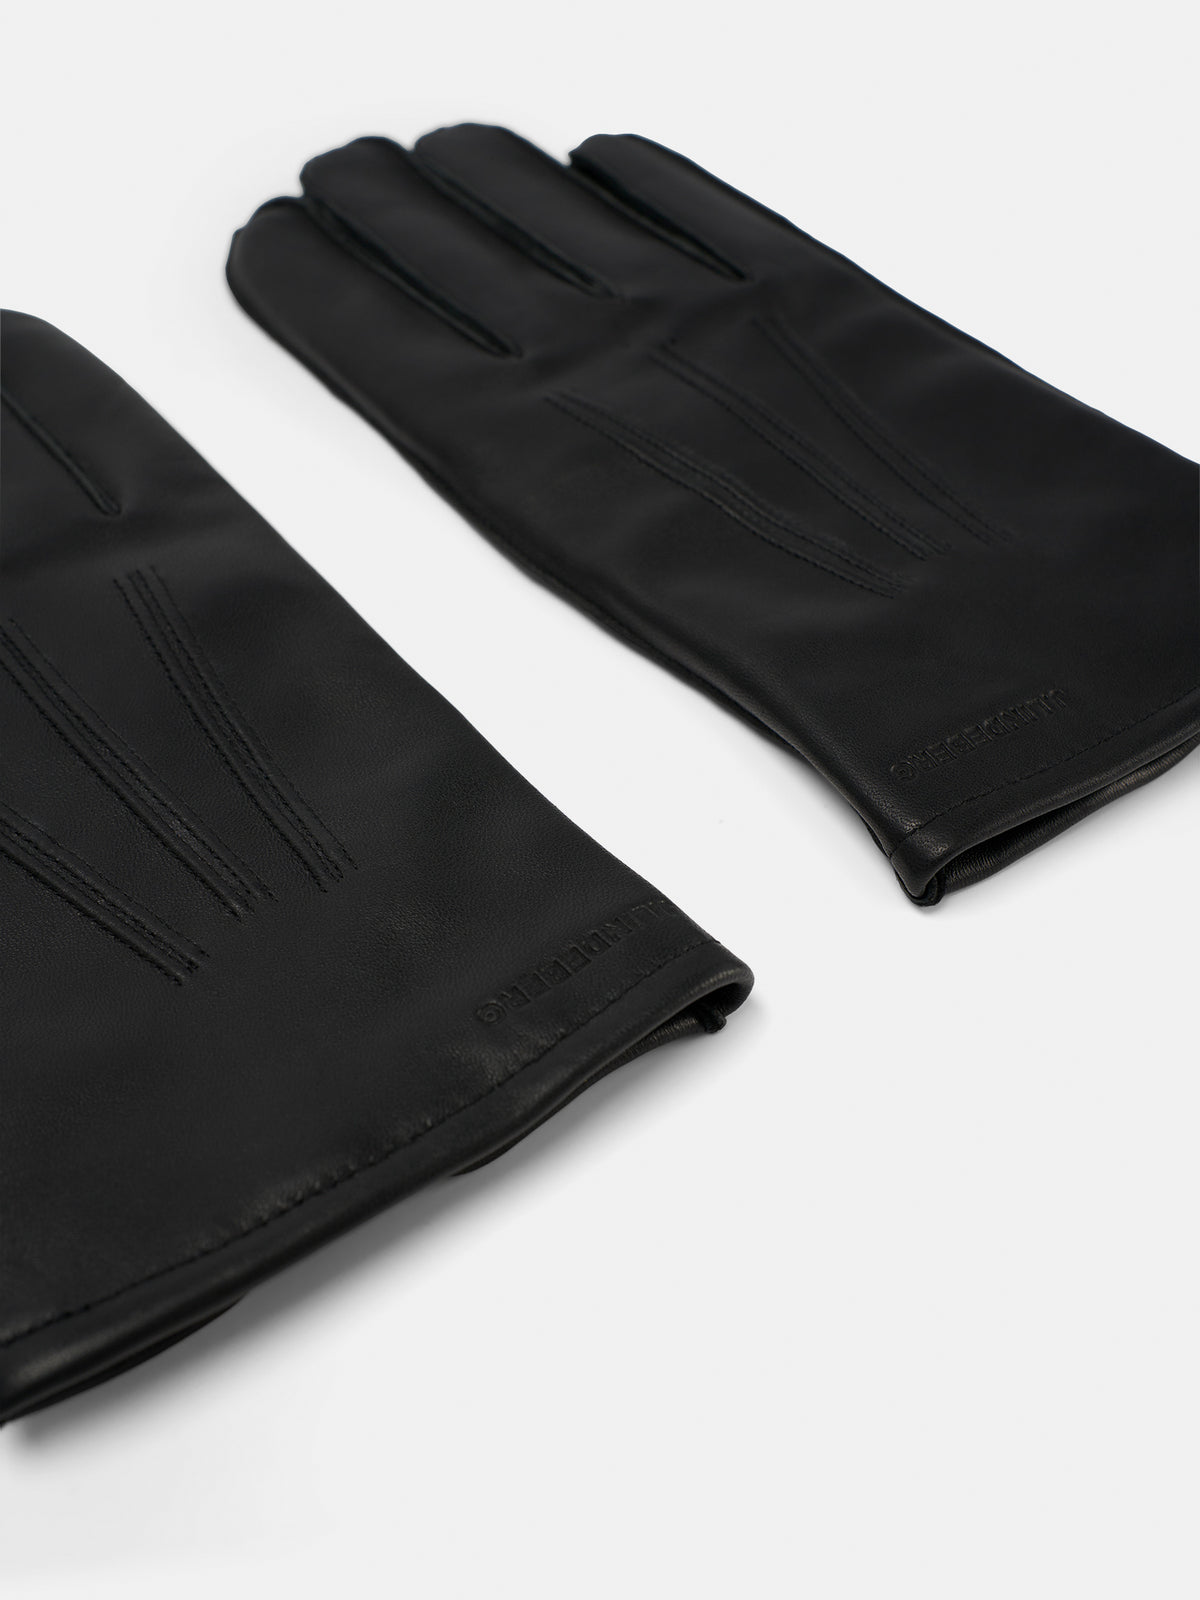 Milo Leather Glove / Black – J.Lindeberg